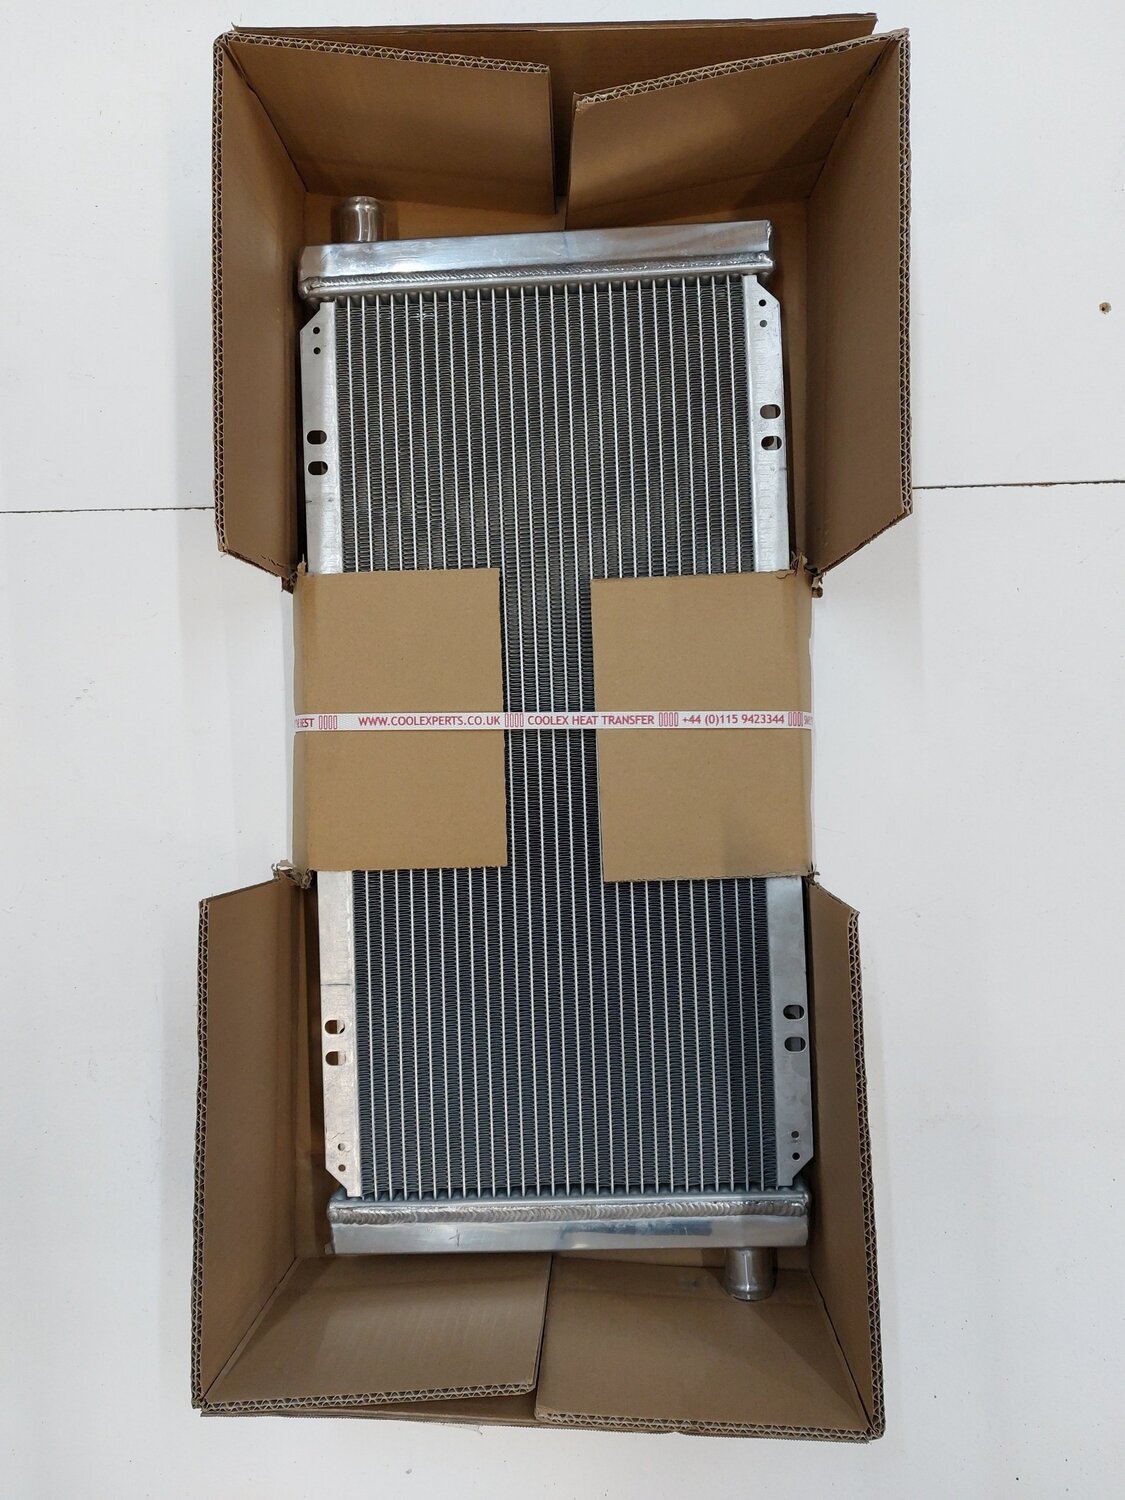 VX220 elise radiator